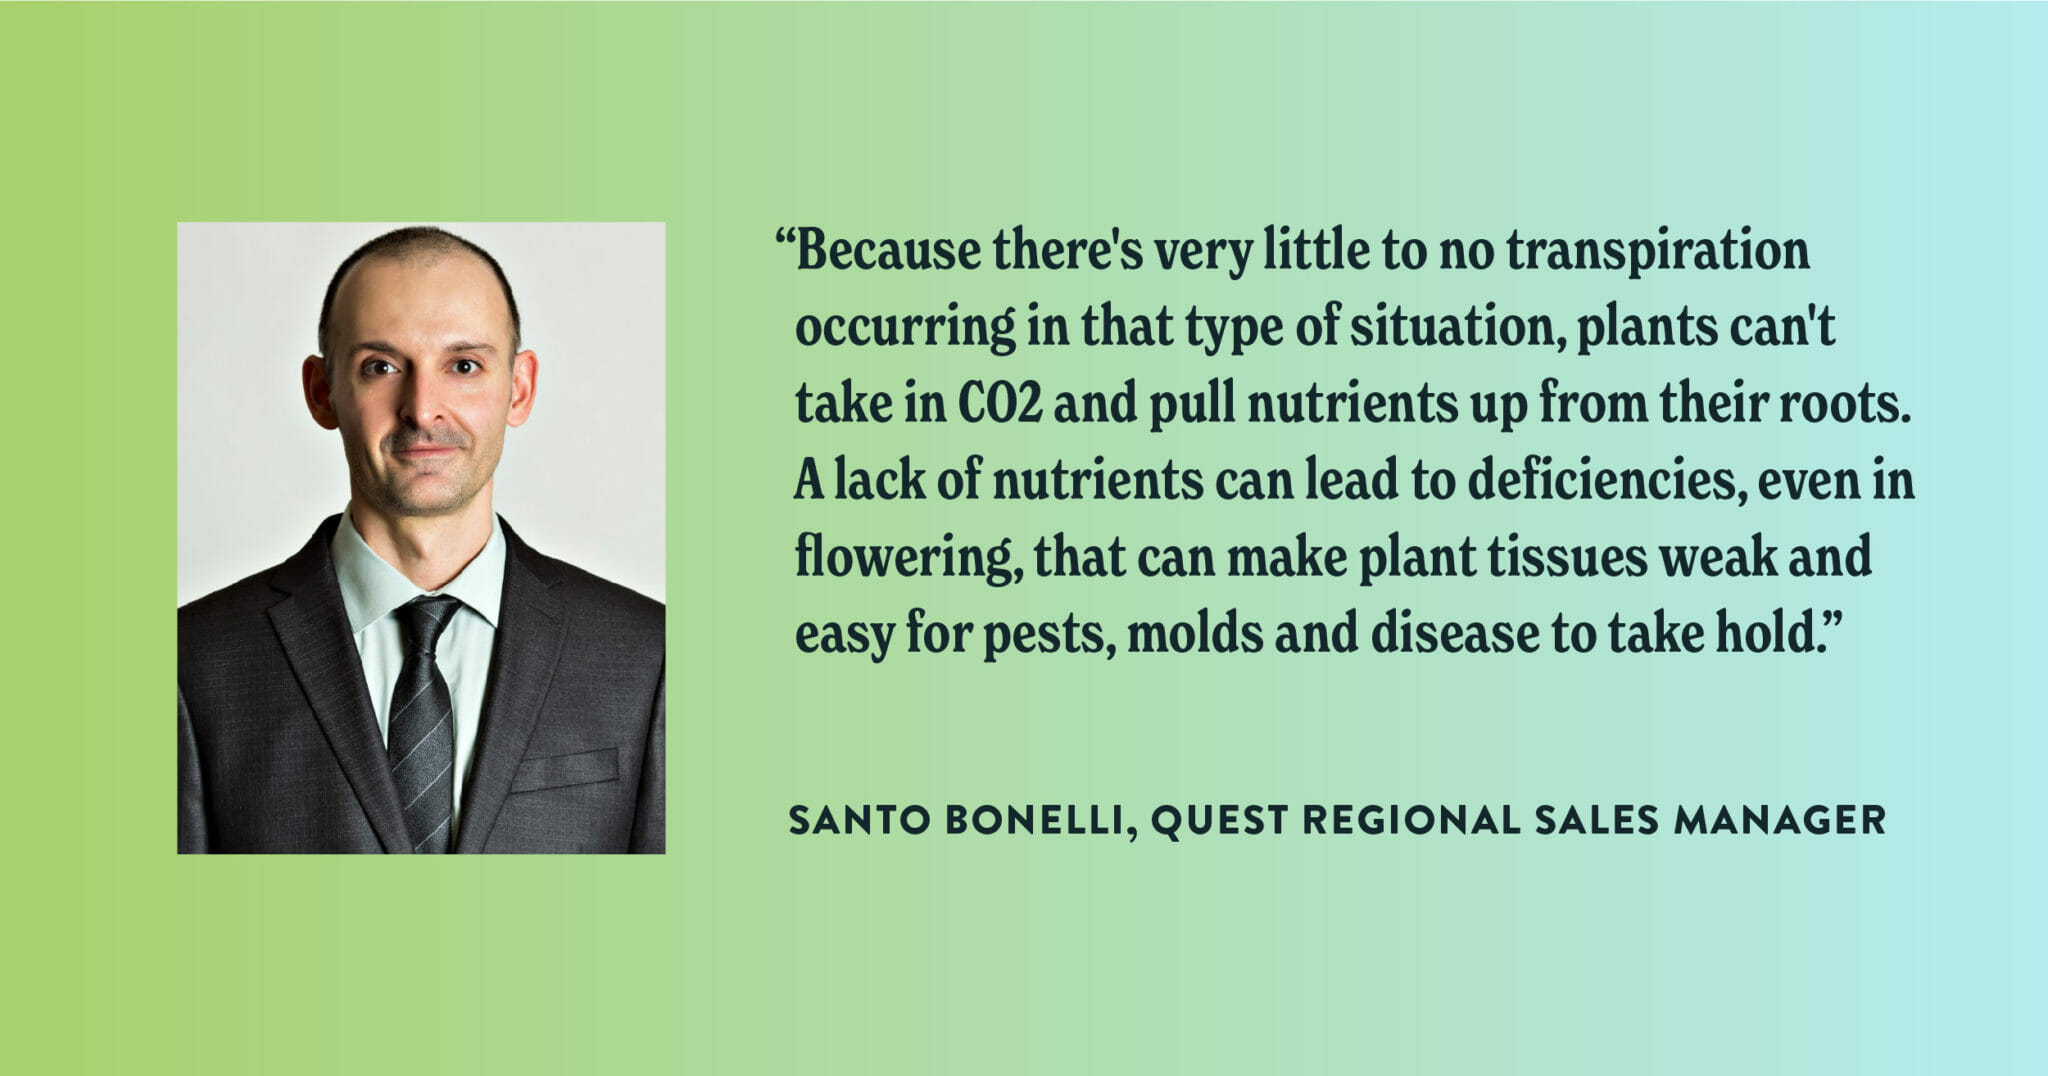 A lack of nutrients can lead to deficiencies. - Santo Bonelli, Quest regional sales manager